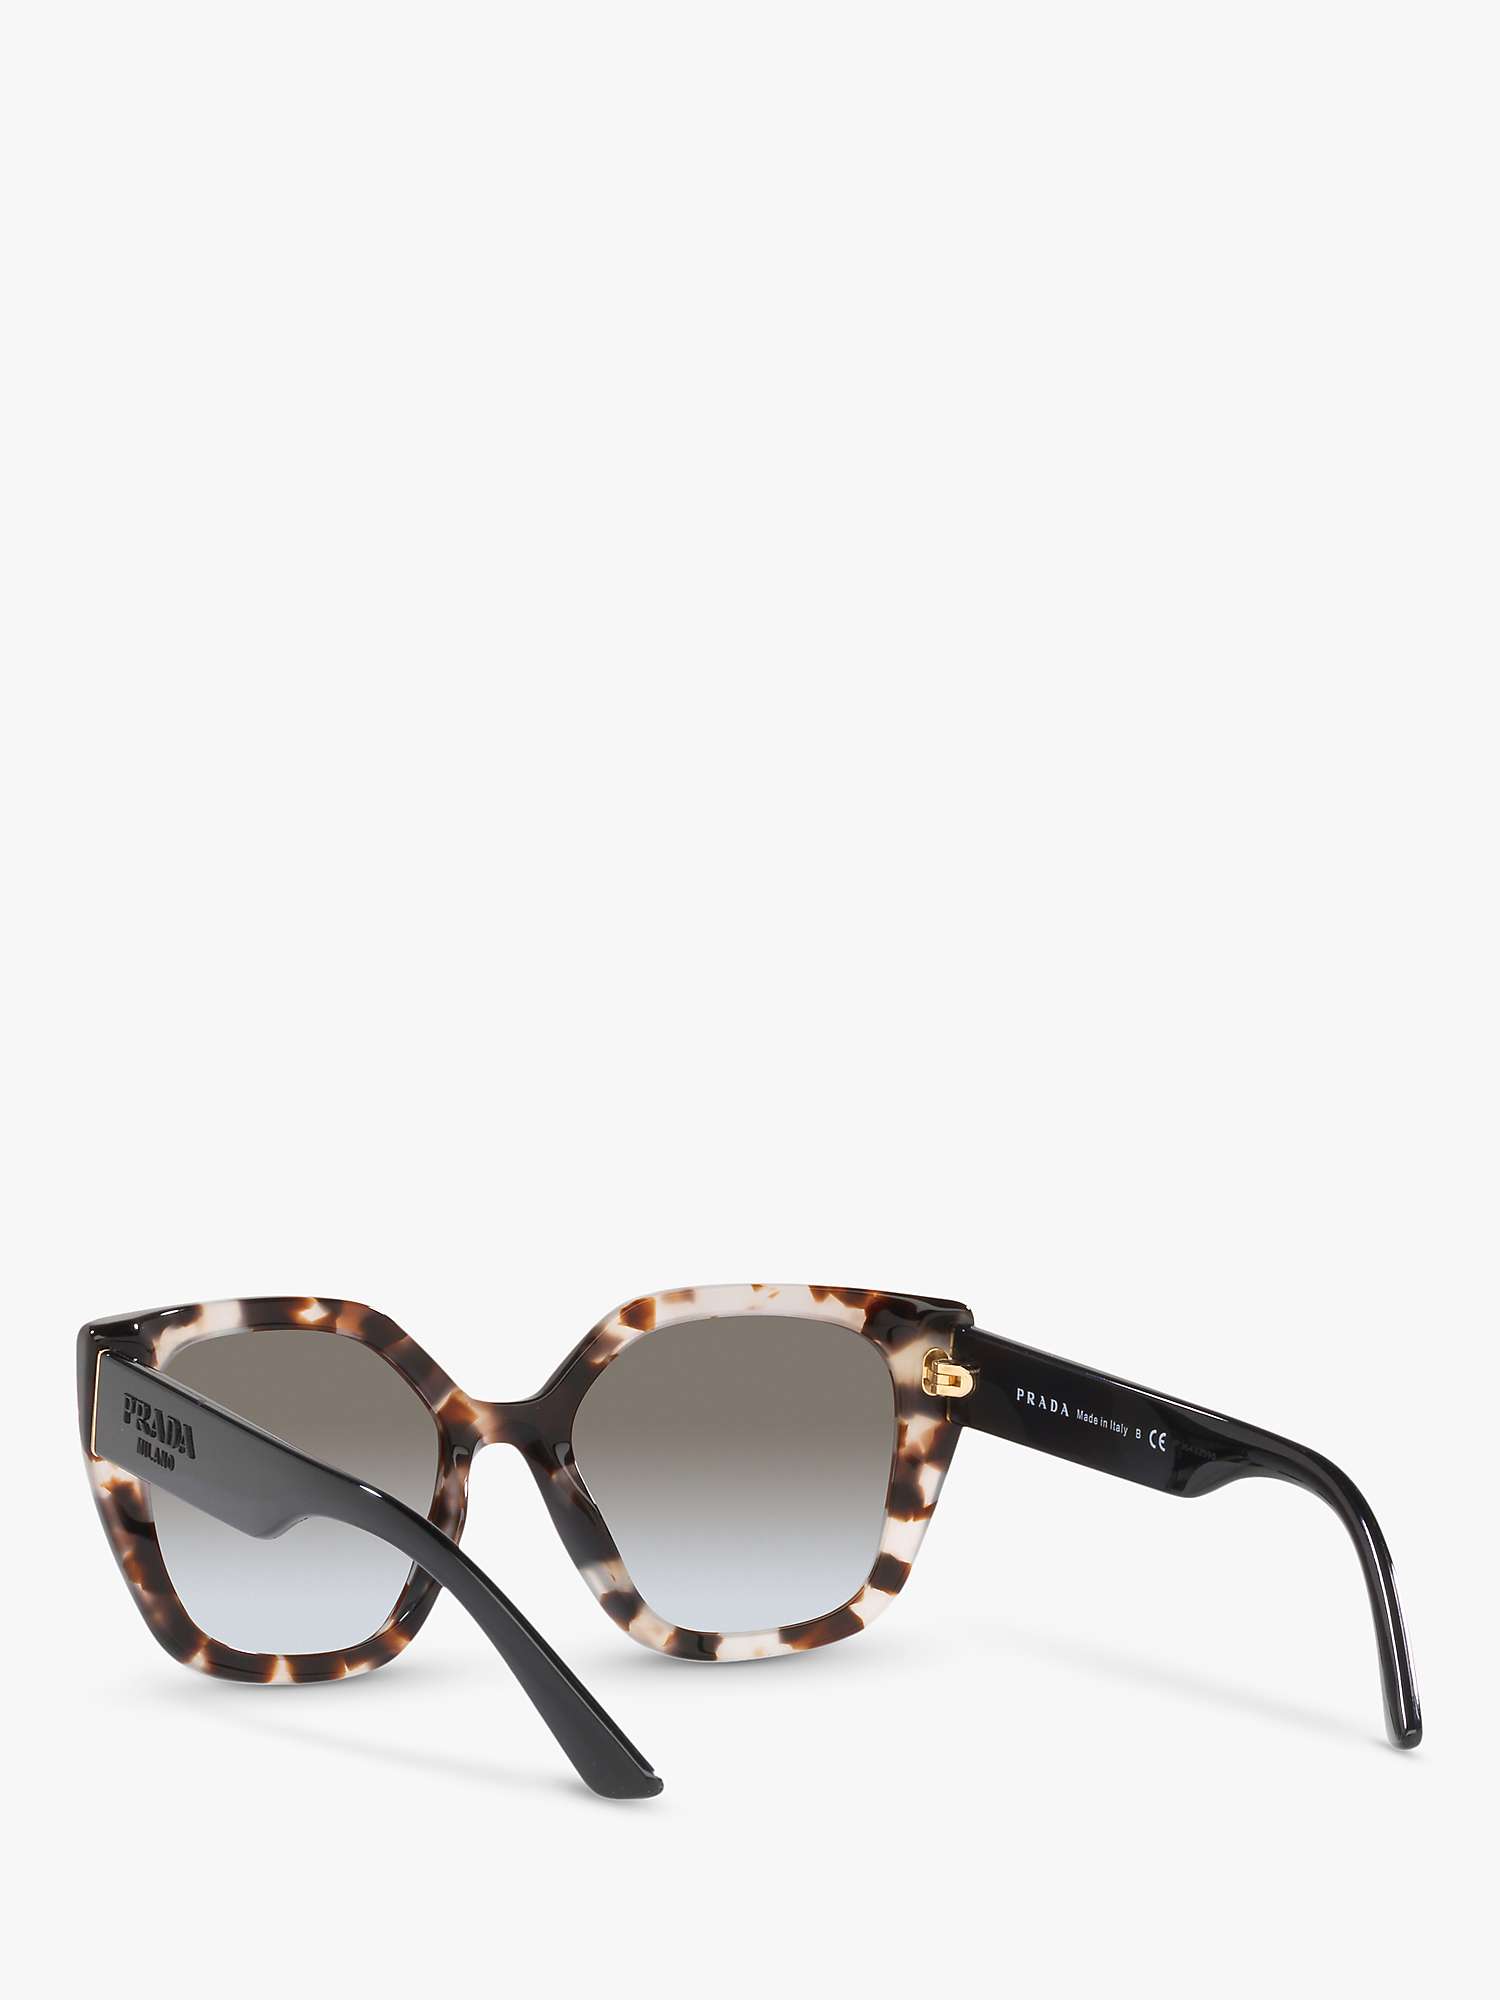 Buy Prada PR24XS Women's Cat's Eye Sunglasses, White Tortoise Online at johnlewis.com